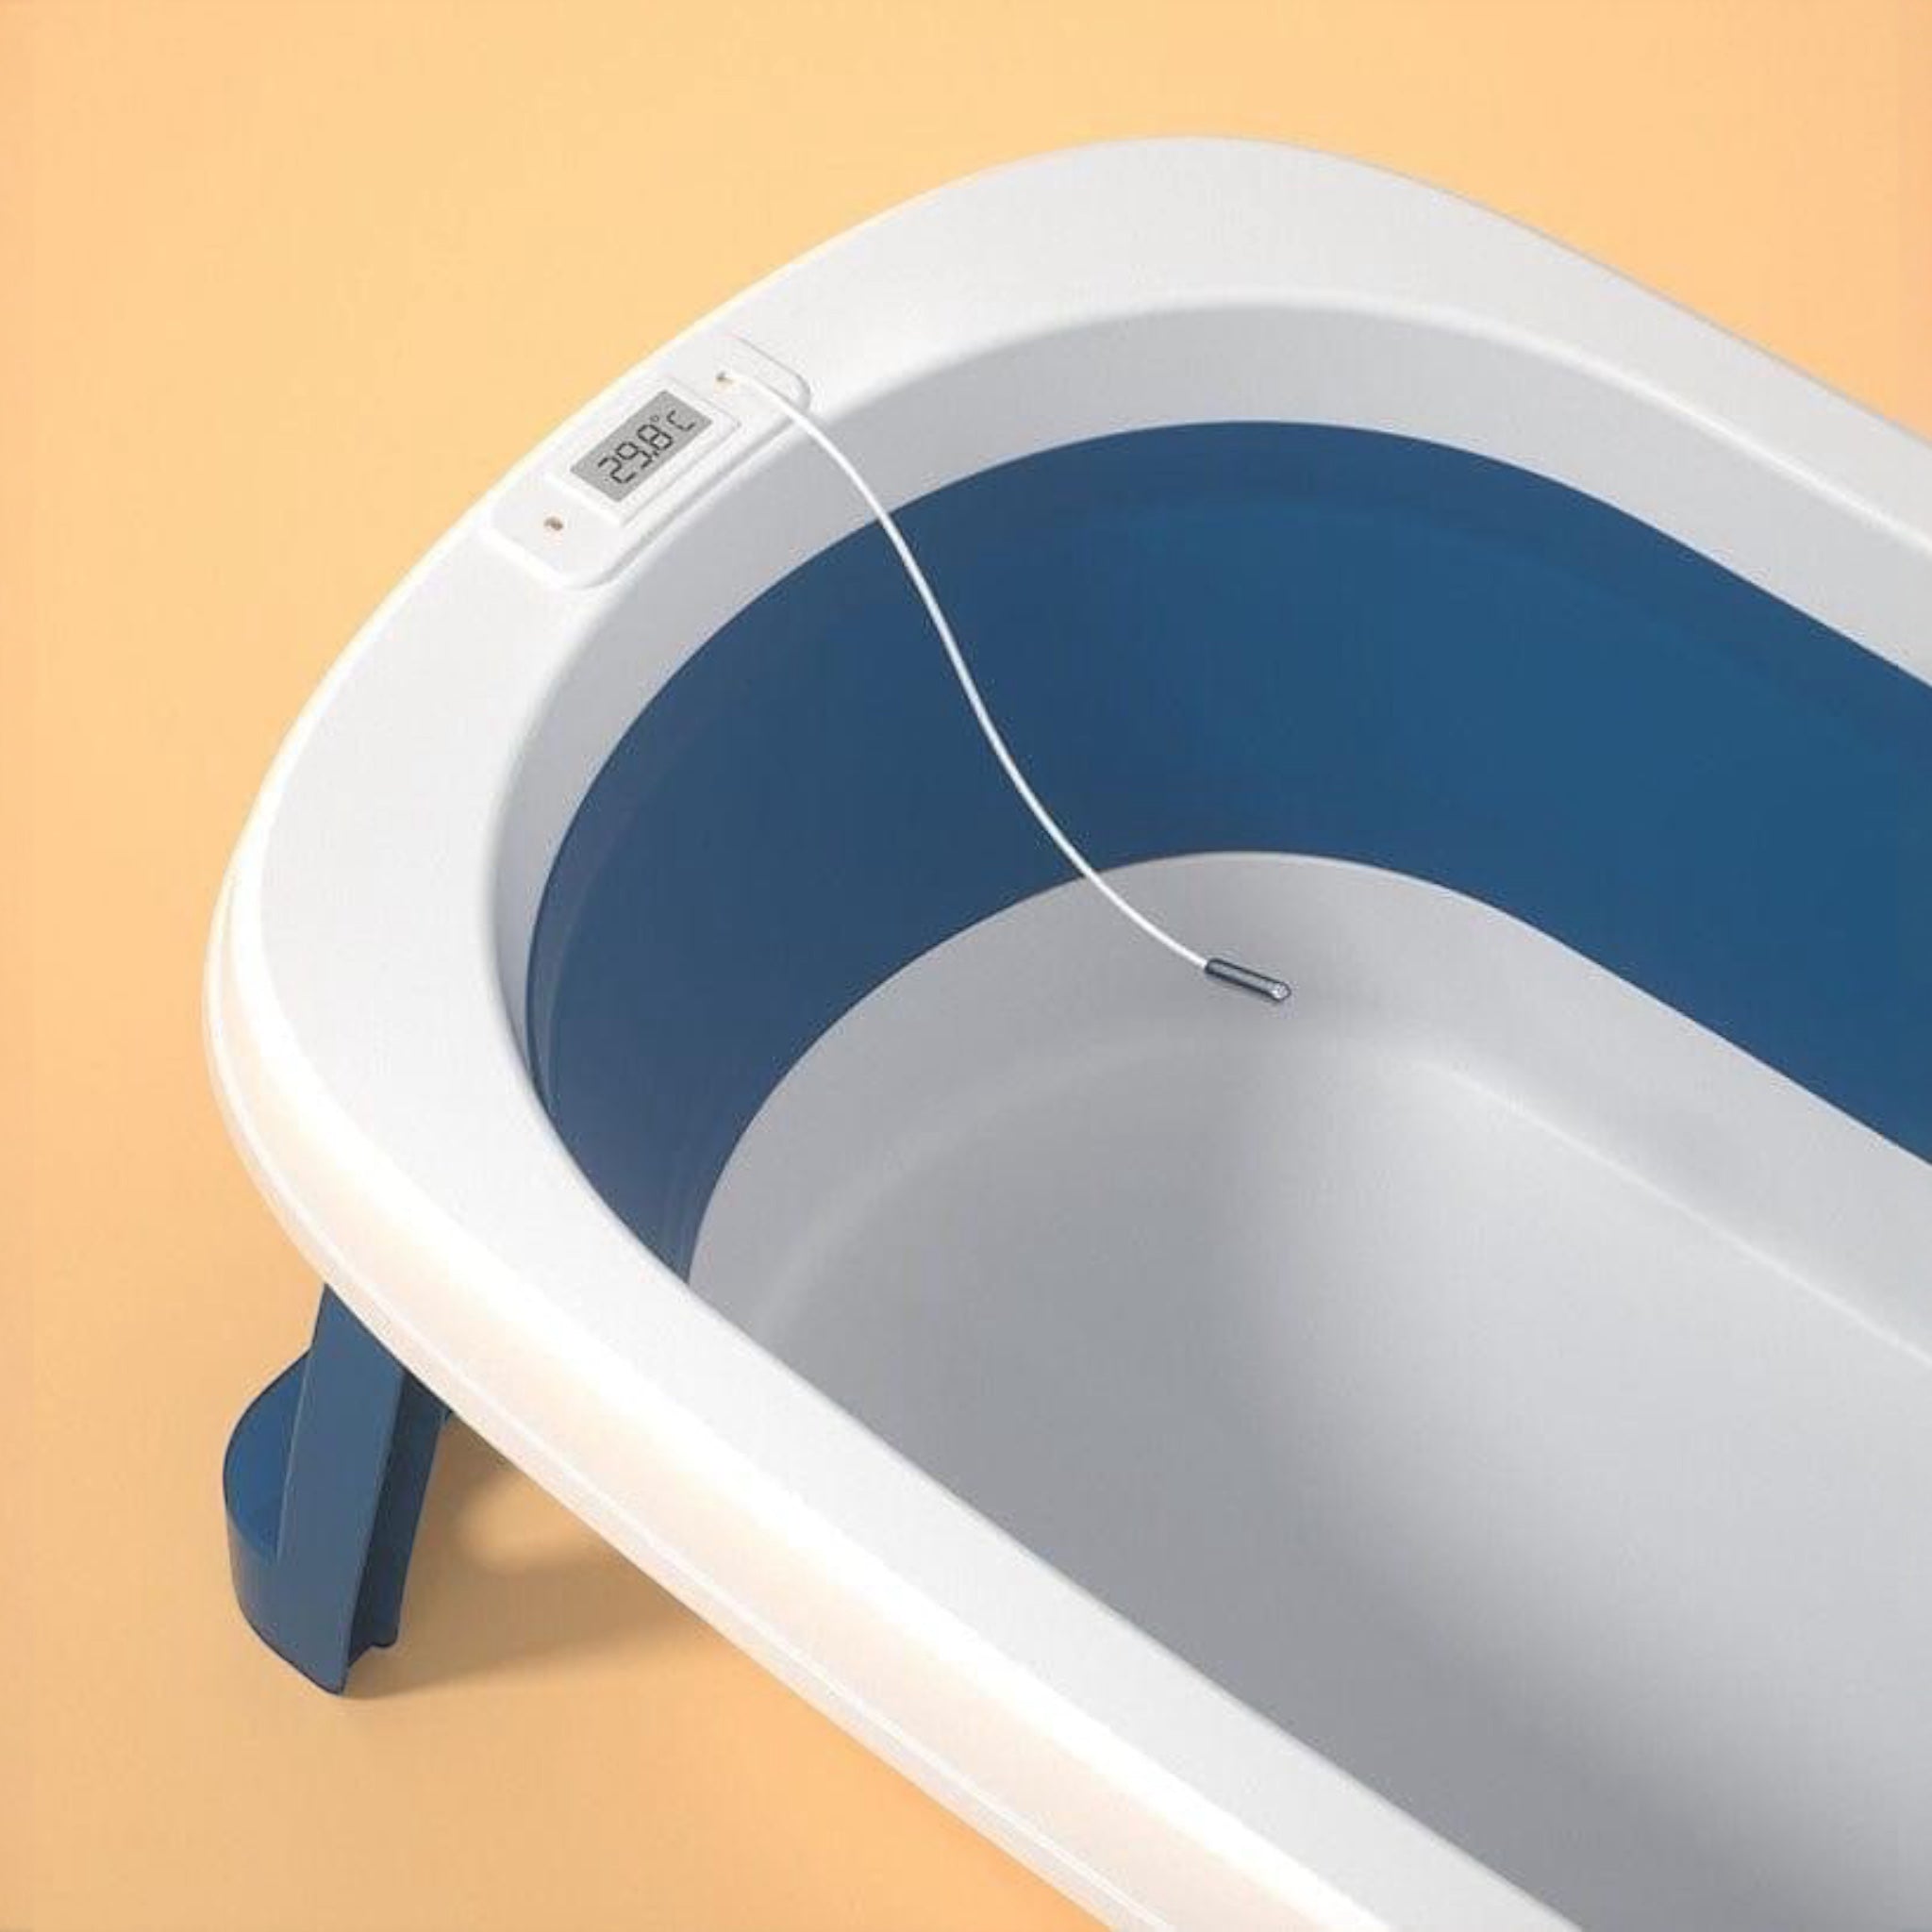 Foldable Bathtub For Newborns,Travel Essential Bathtub With Smart Temperature Detection System